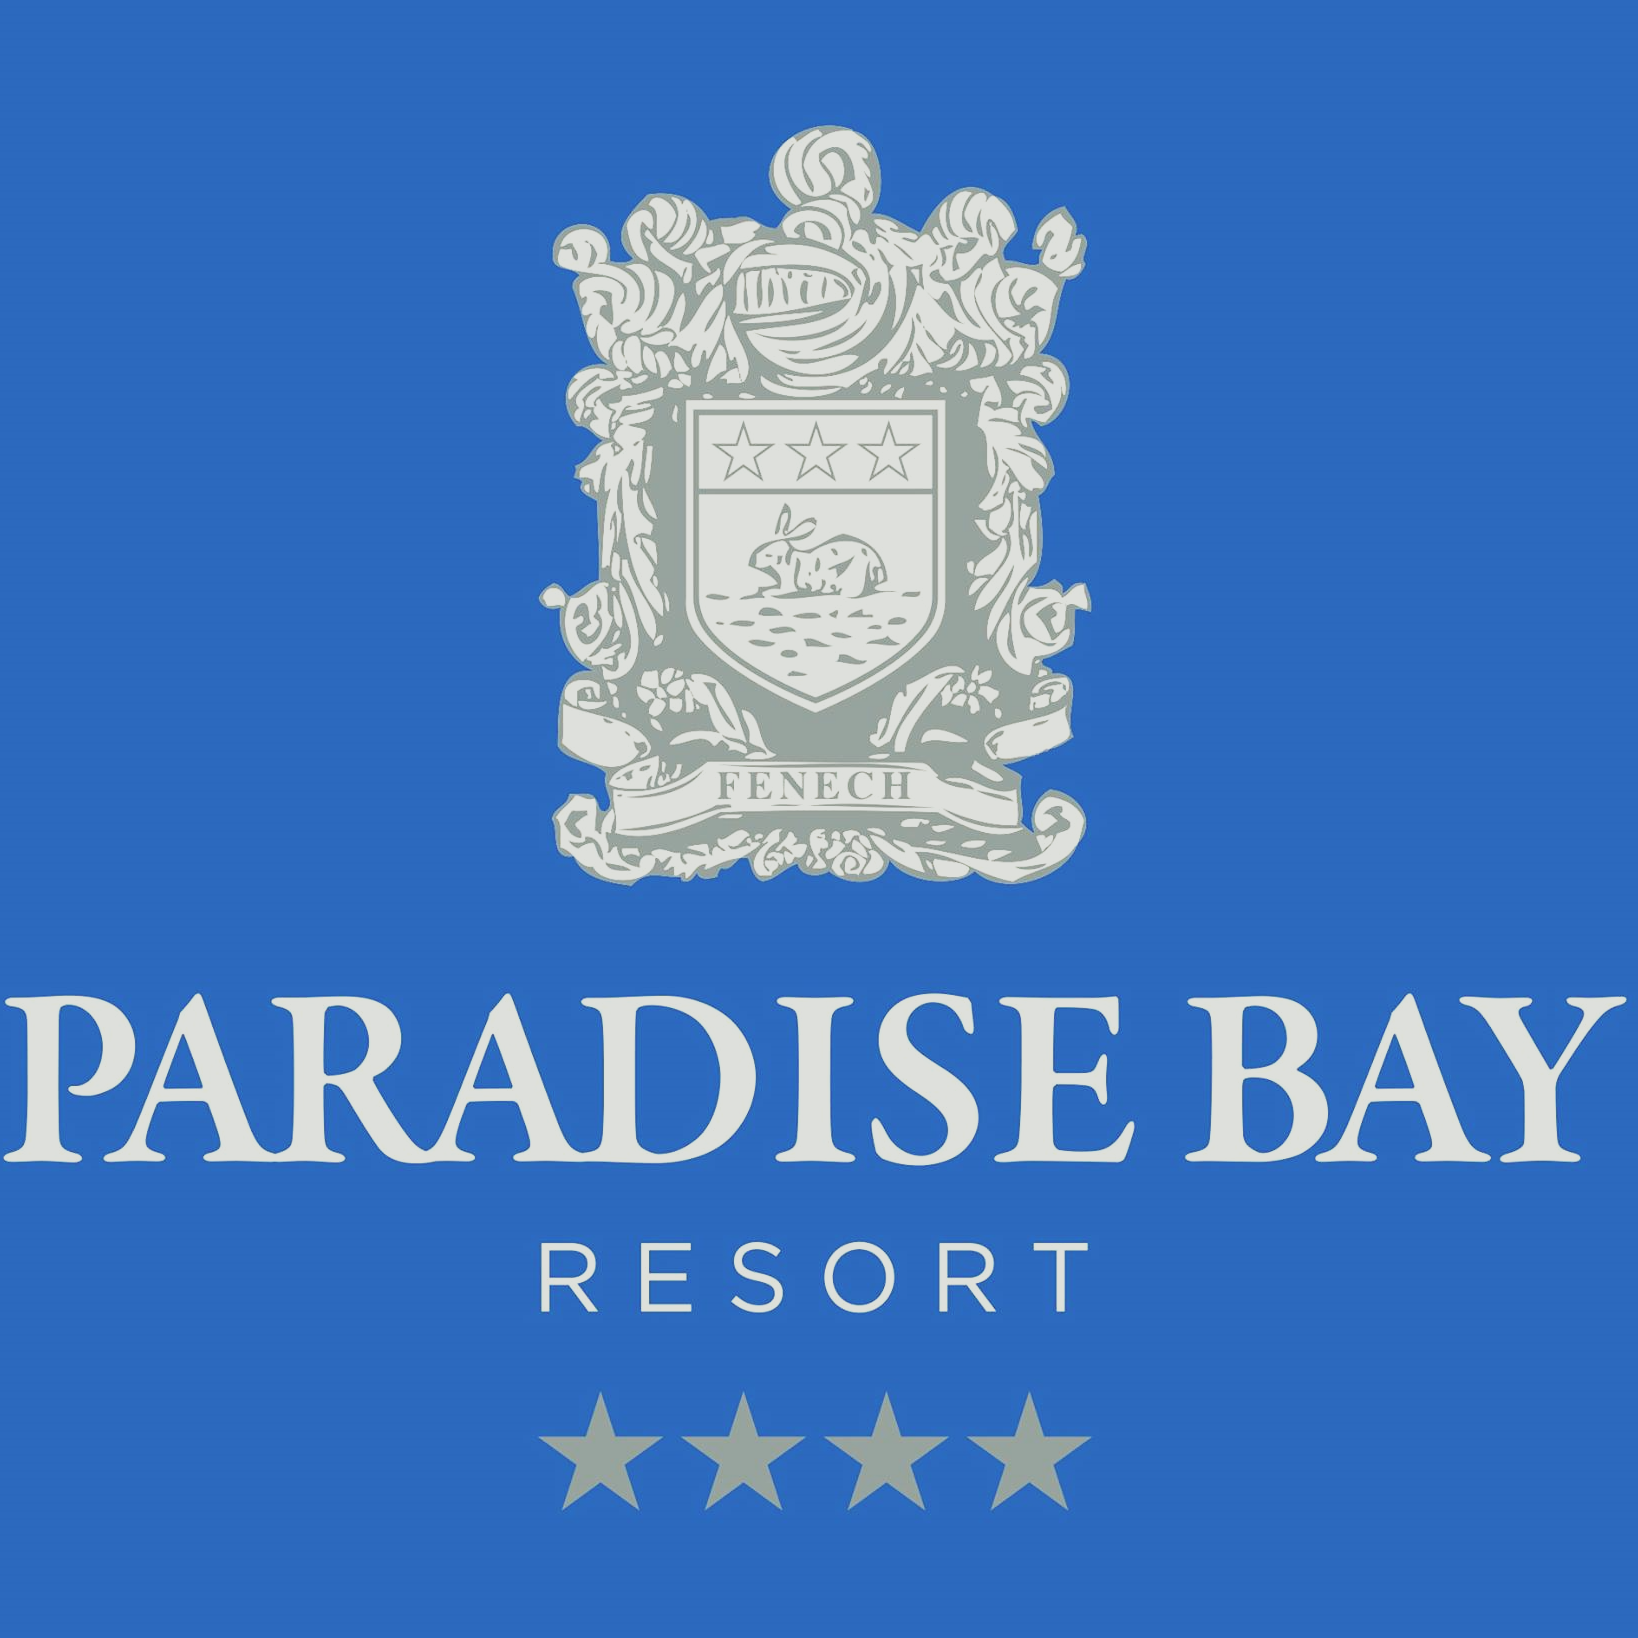 Paradise Bay Resort